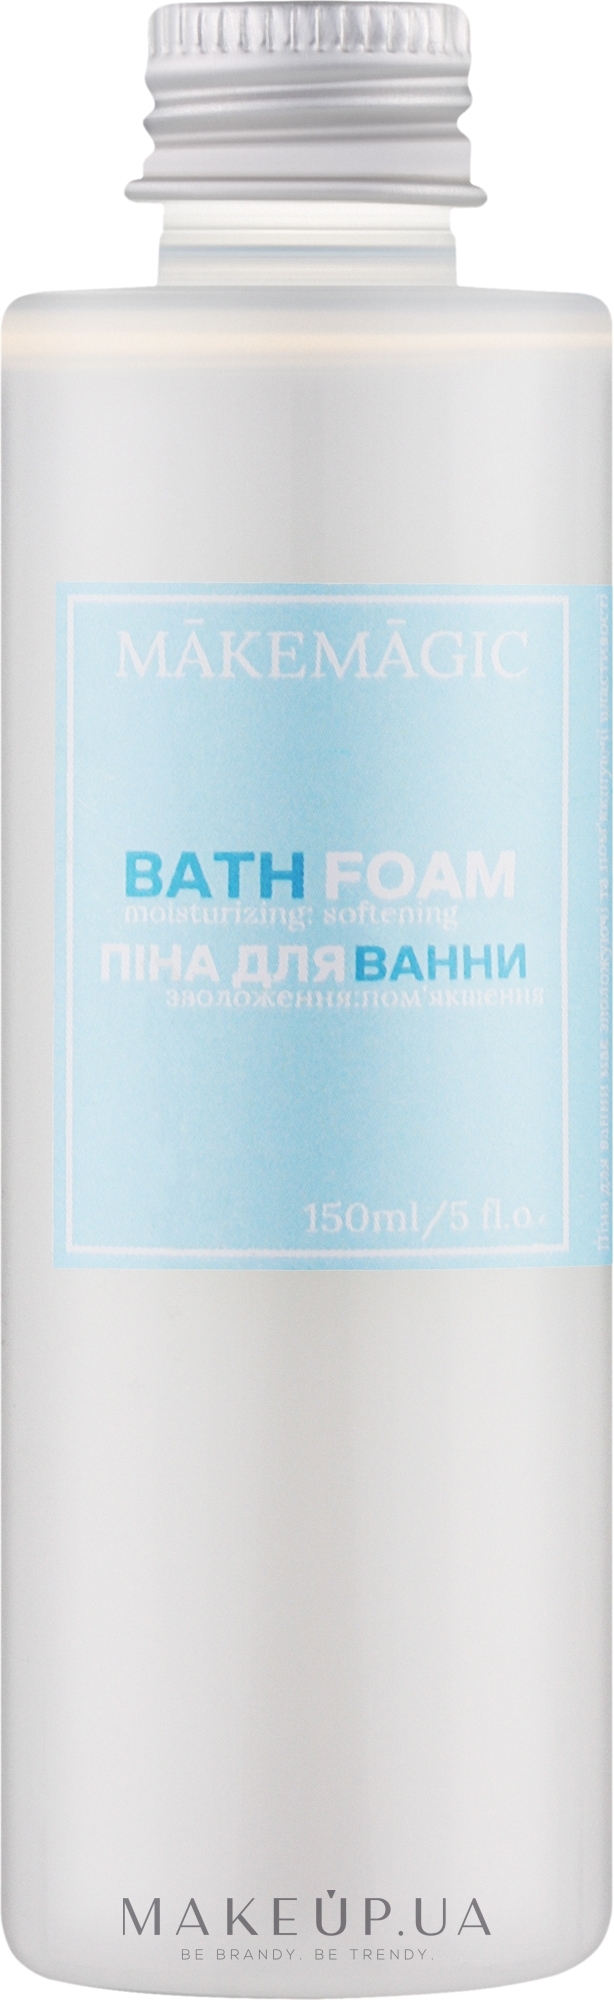 Пенка для ванной "Кокос" - Makemagic Bath Foam — фото 150ml